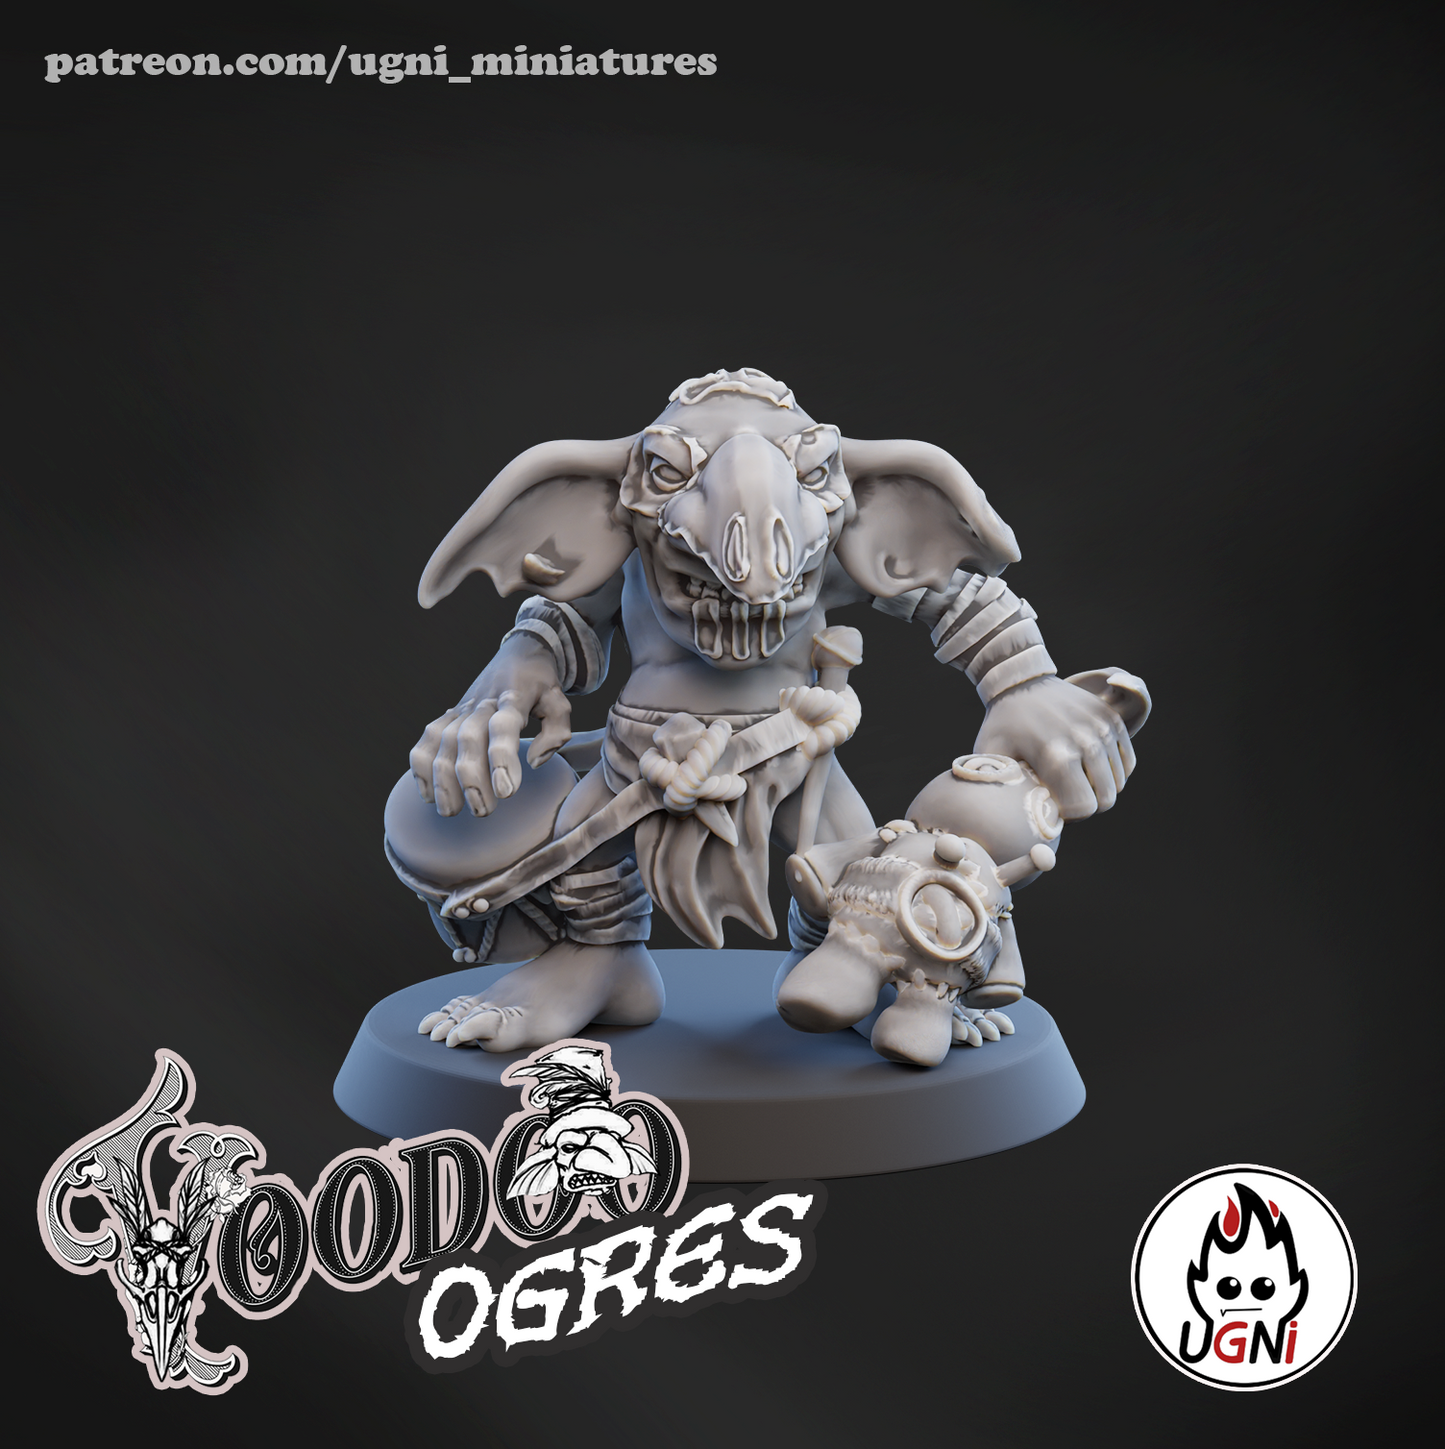 Ogres Team - Voodoo Ogres | UGNI Miniatures | Resin